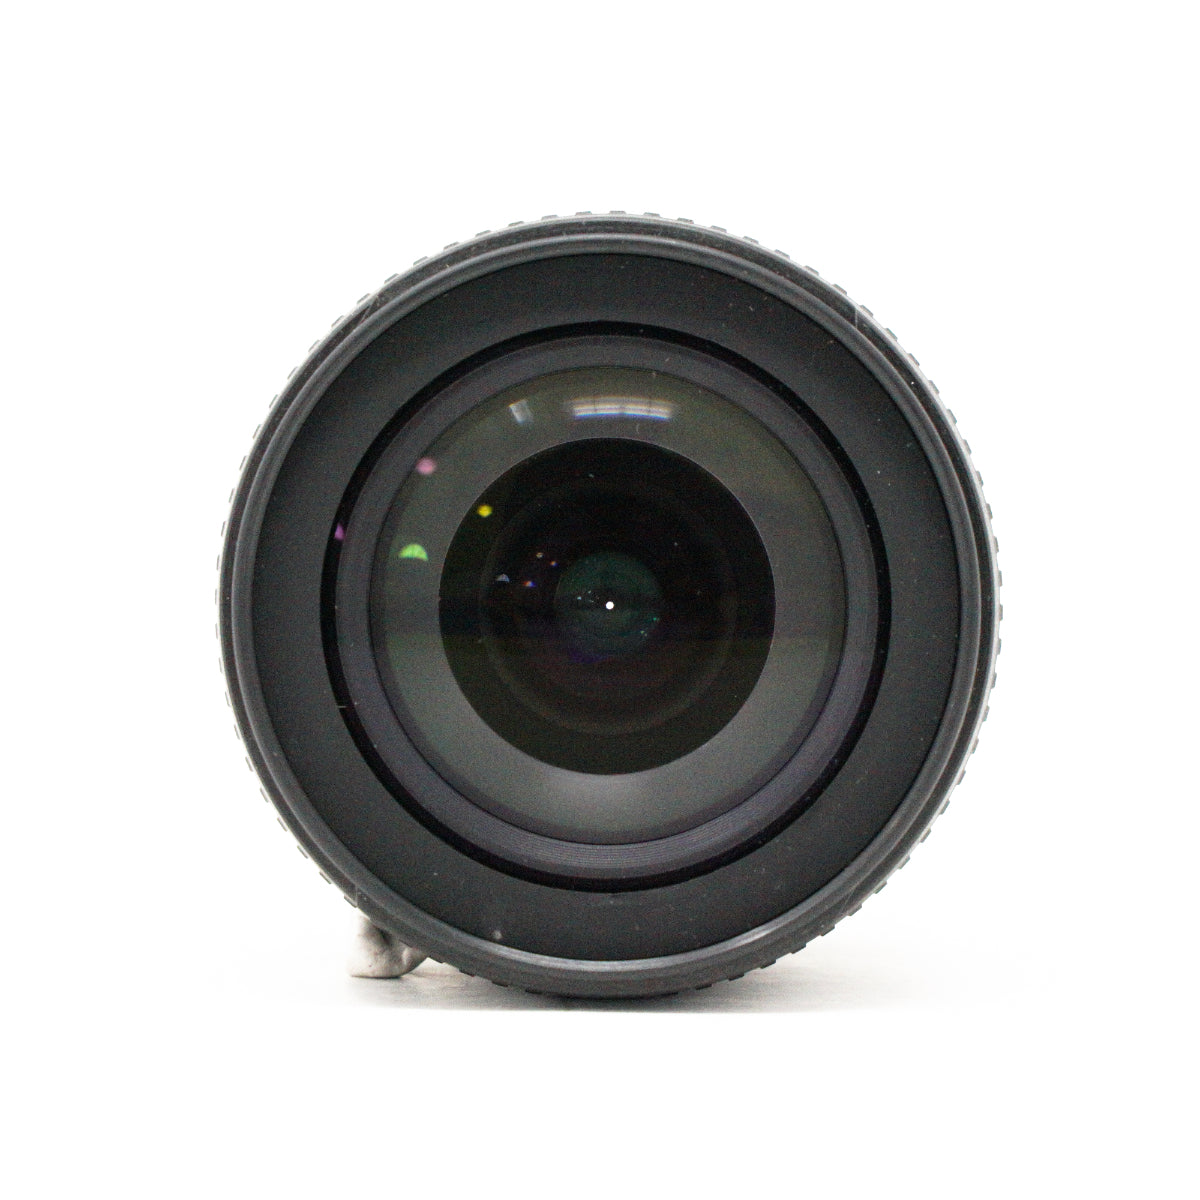 USED Nikon DX 18-105mm f/3.5-5.6G Lens